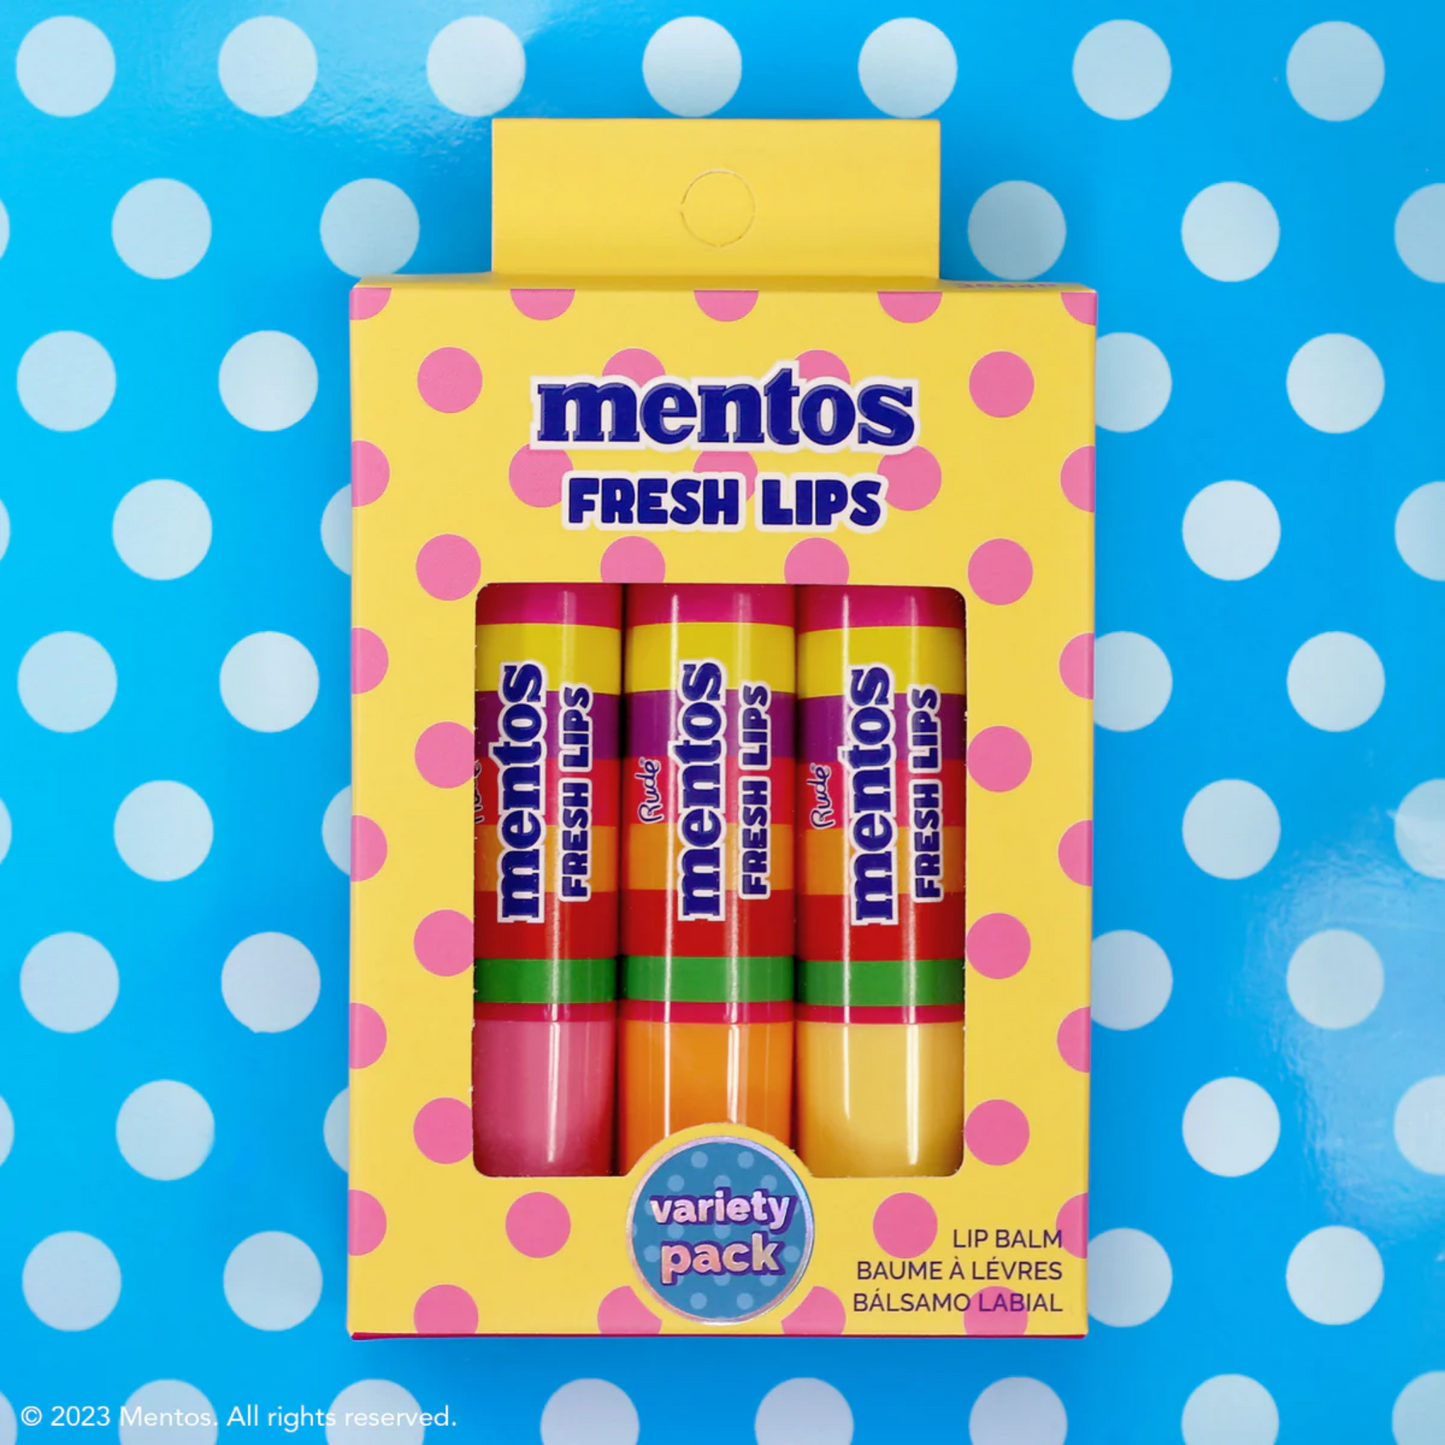 Rude Cosmetics X Mentos Fresh Lips Variety Pack (Lip Balm) - Tropical Mix